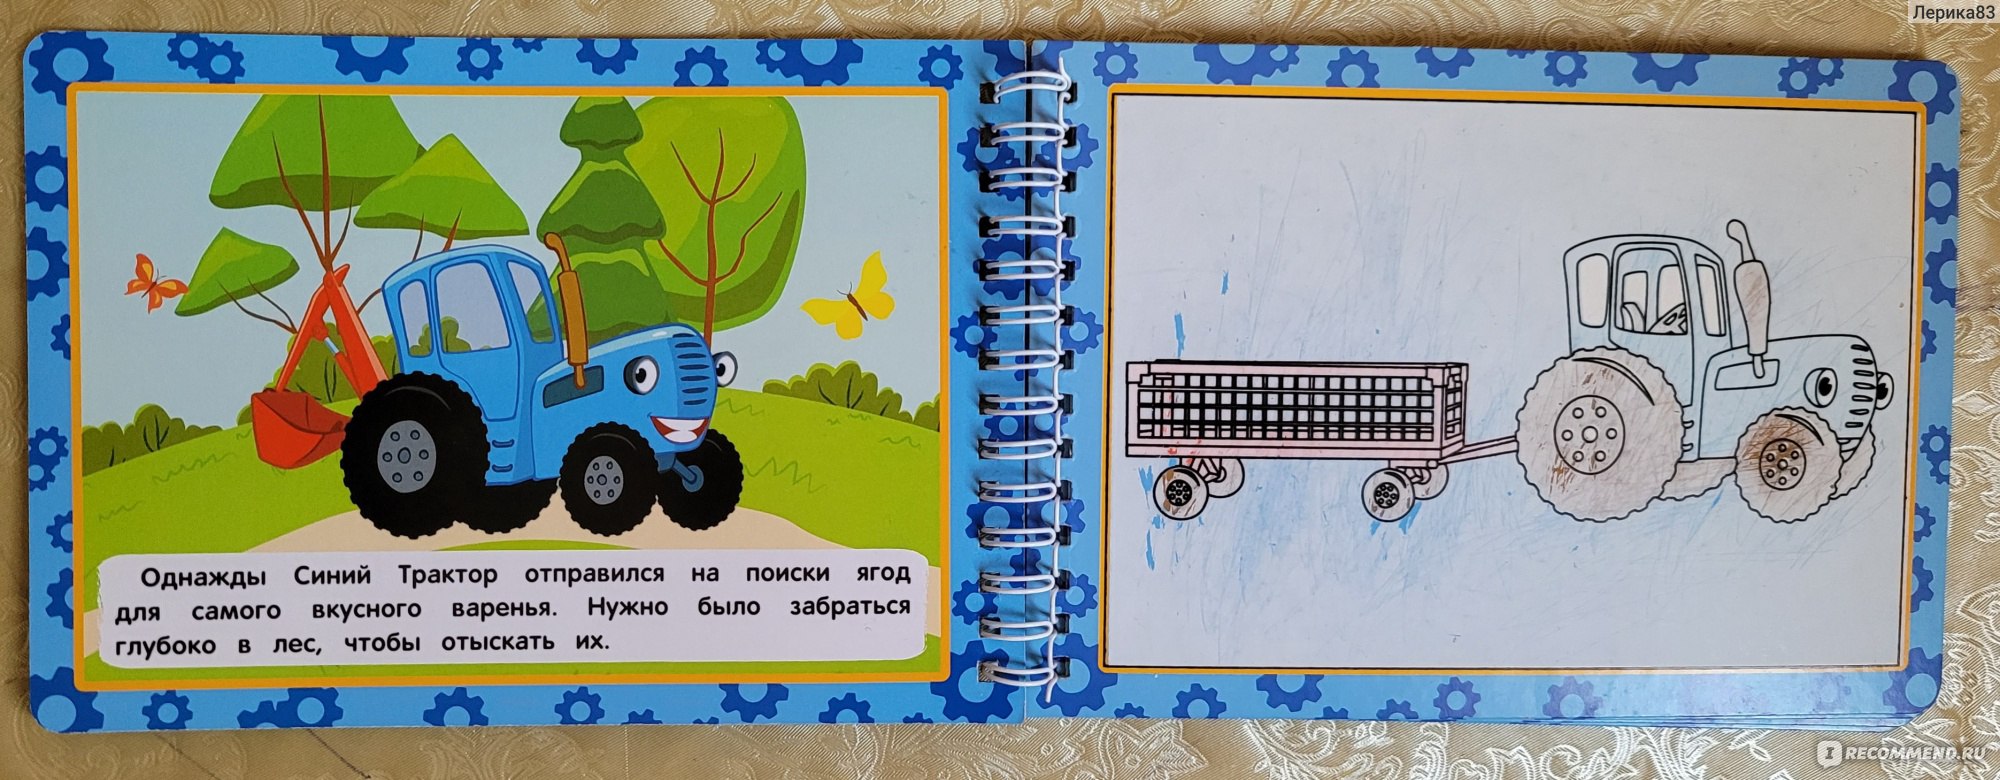 картинки про синего трактора